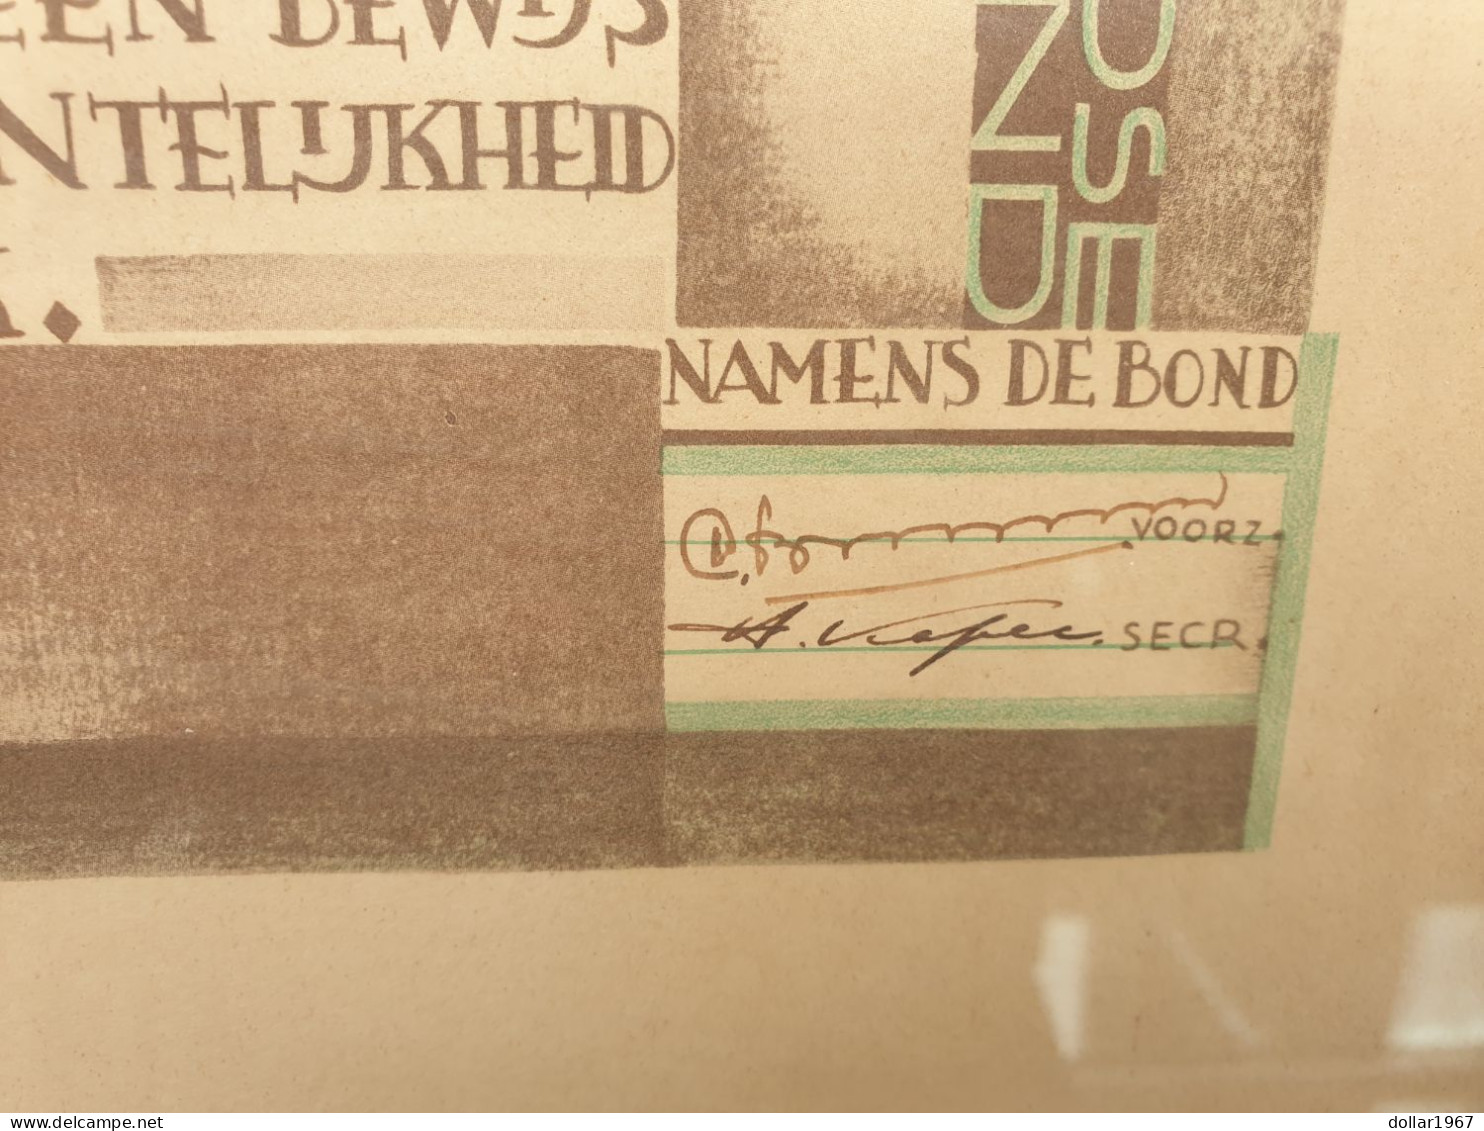 Certificate /Certificat / Zertifikat /  Oorkonde – Algemene Nederlandse Bouwbedrijfsbond, 1945  Dutch